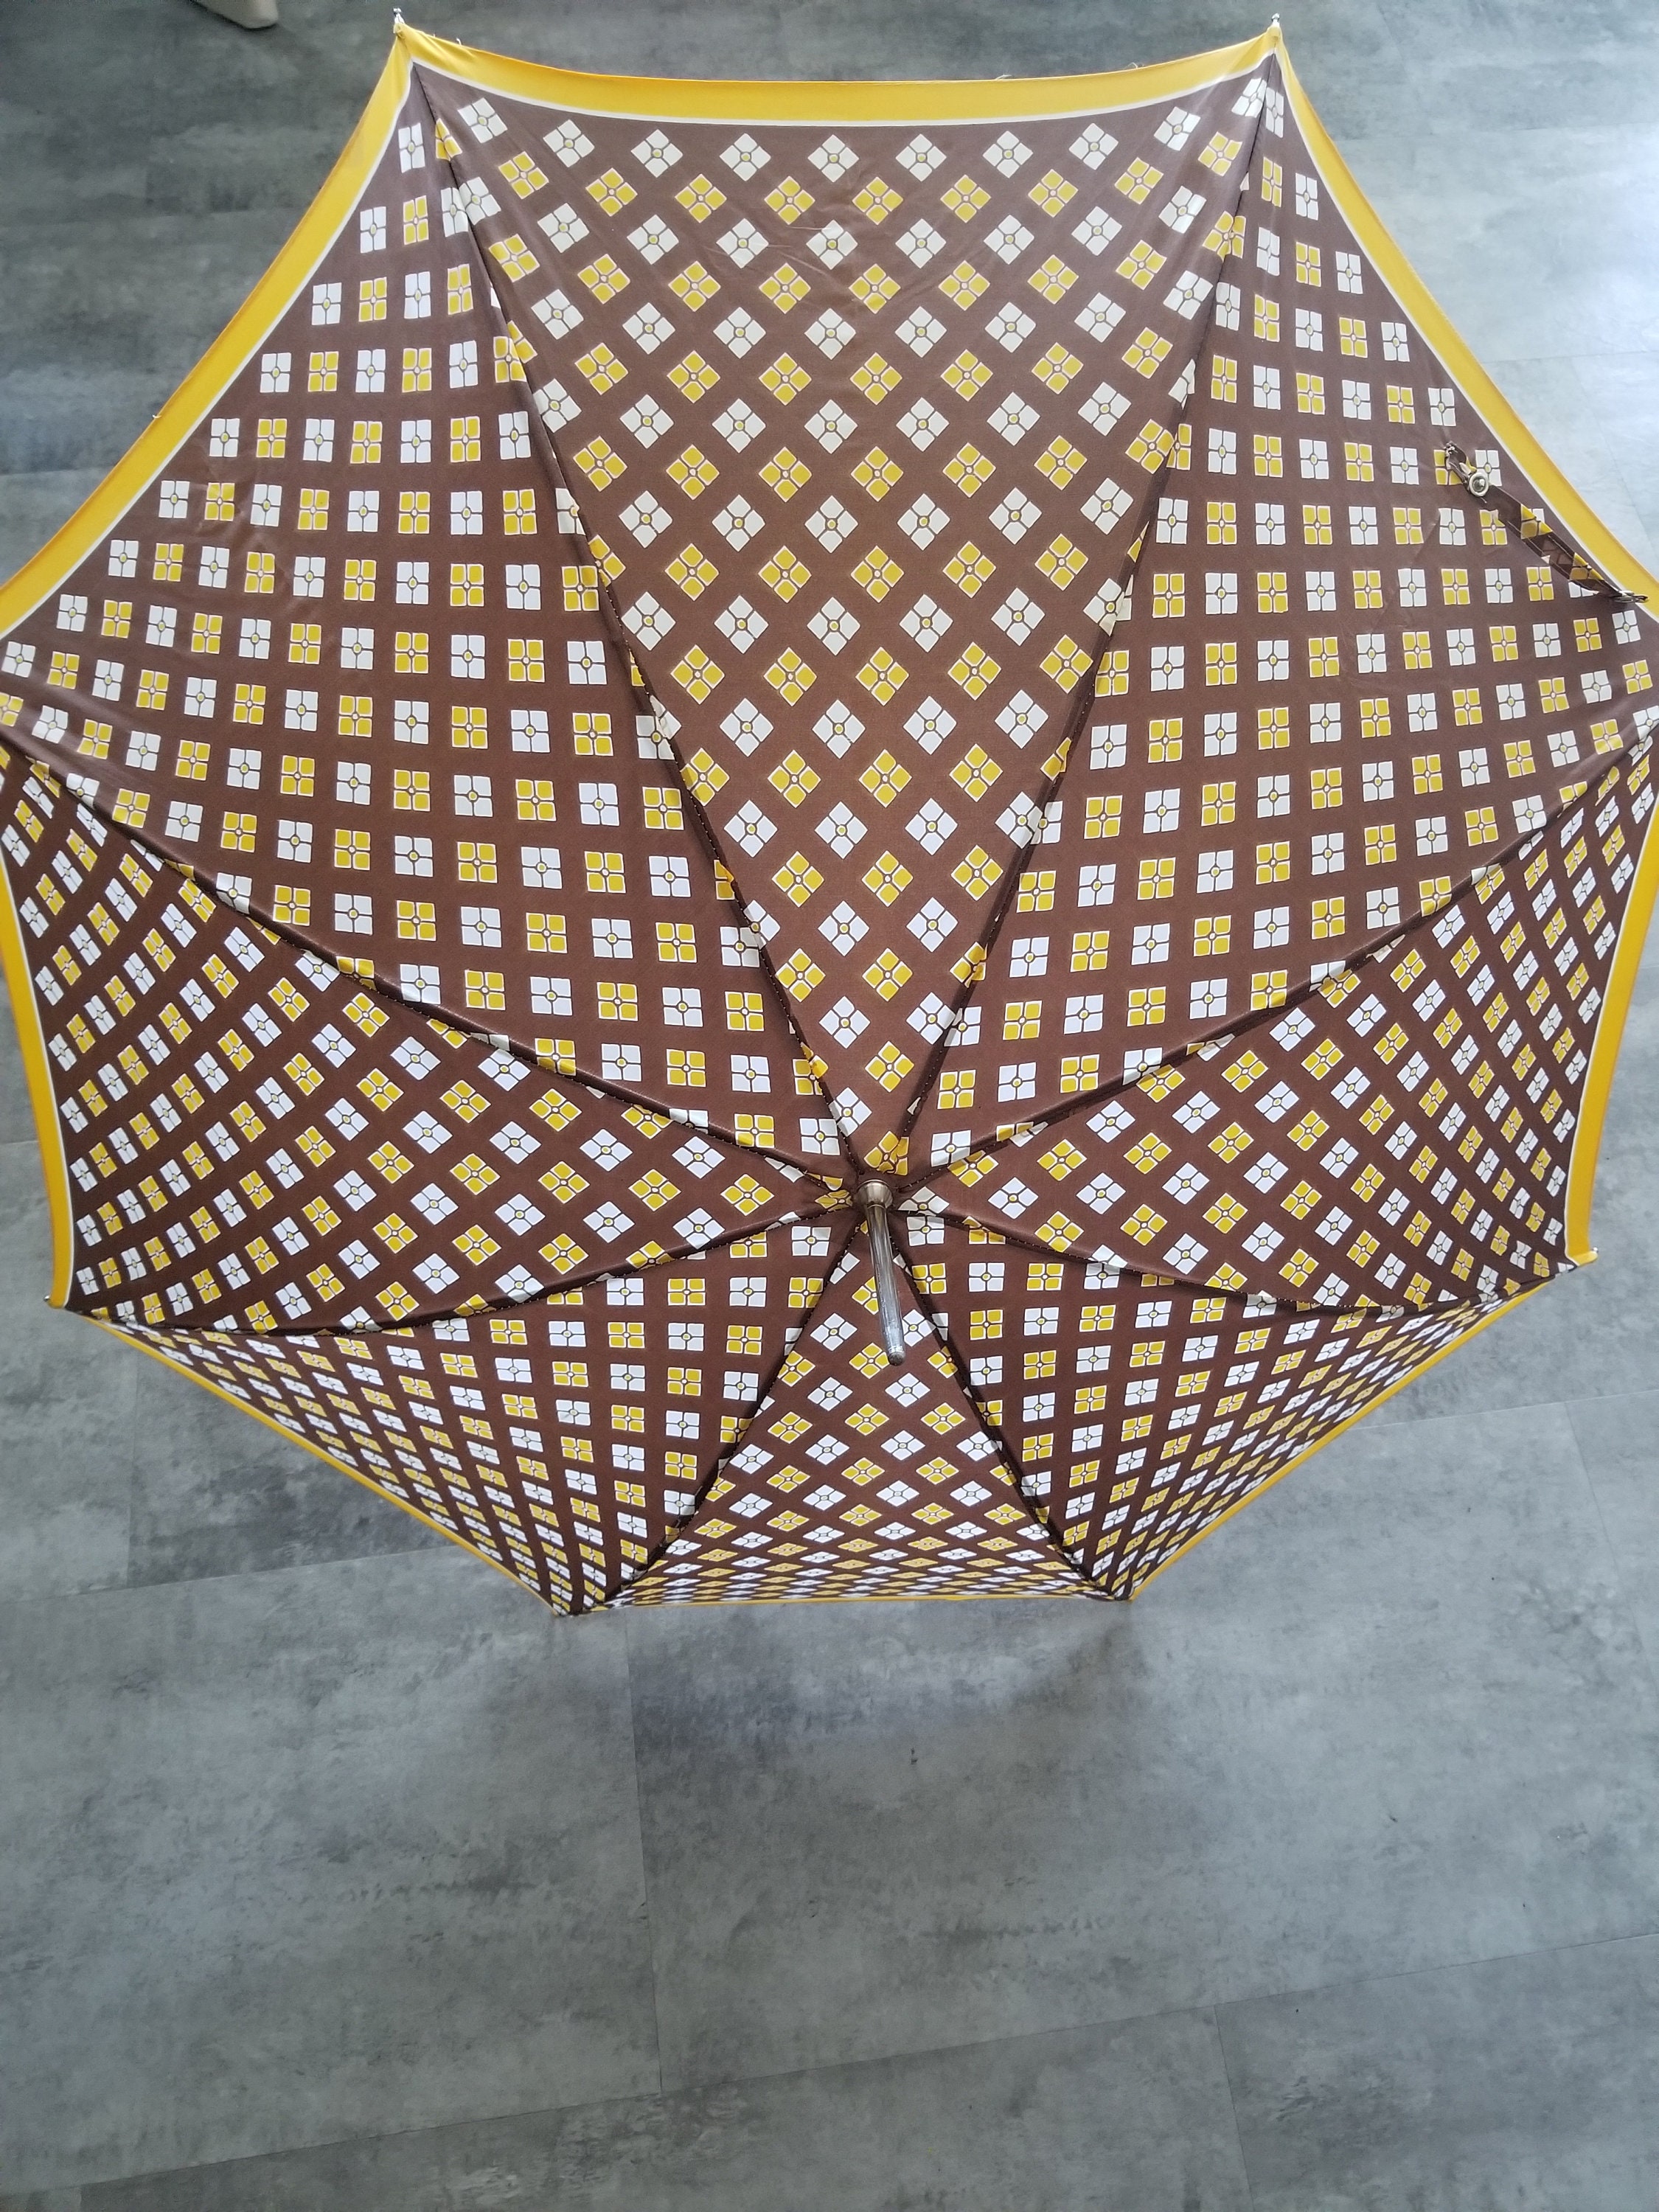 Rare Vintage Gucci Umbrella with Lucite, Circa 1960s, Italy